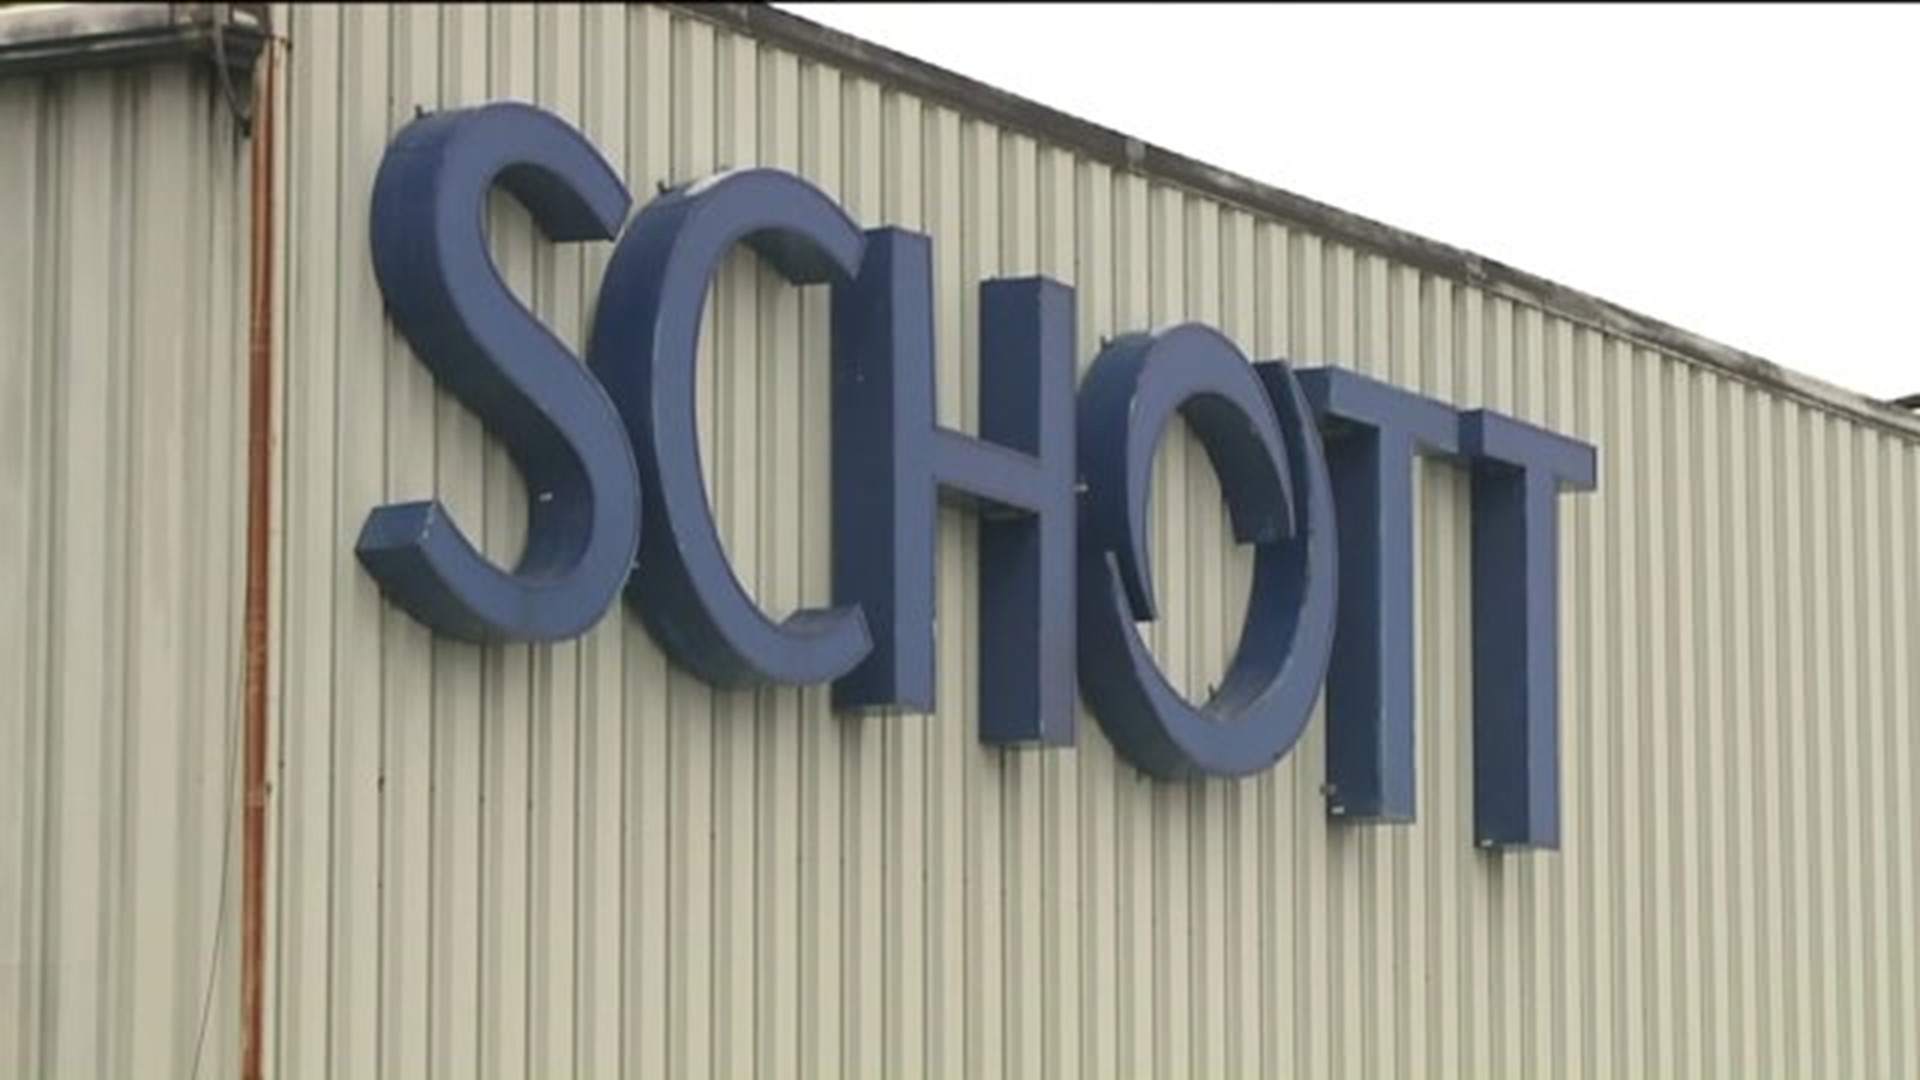 Schott Glass Announces Worker Layoffs